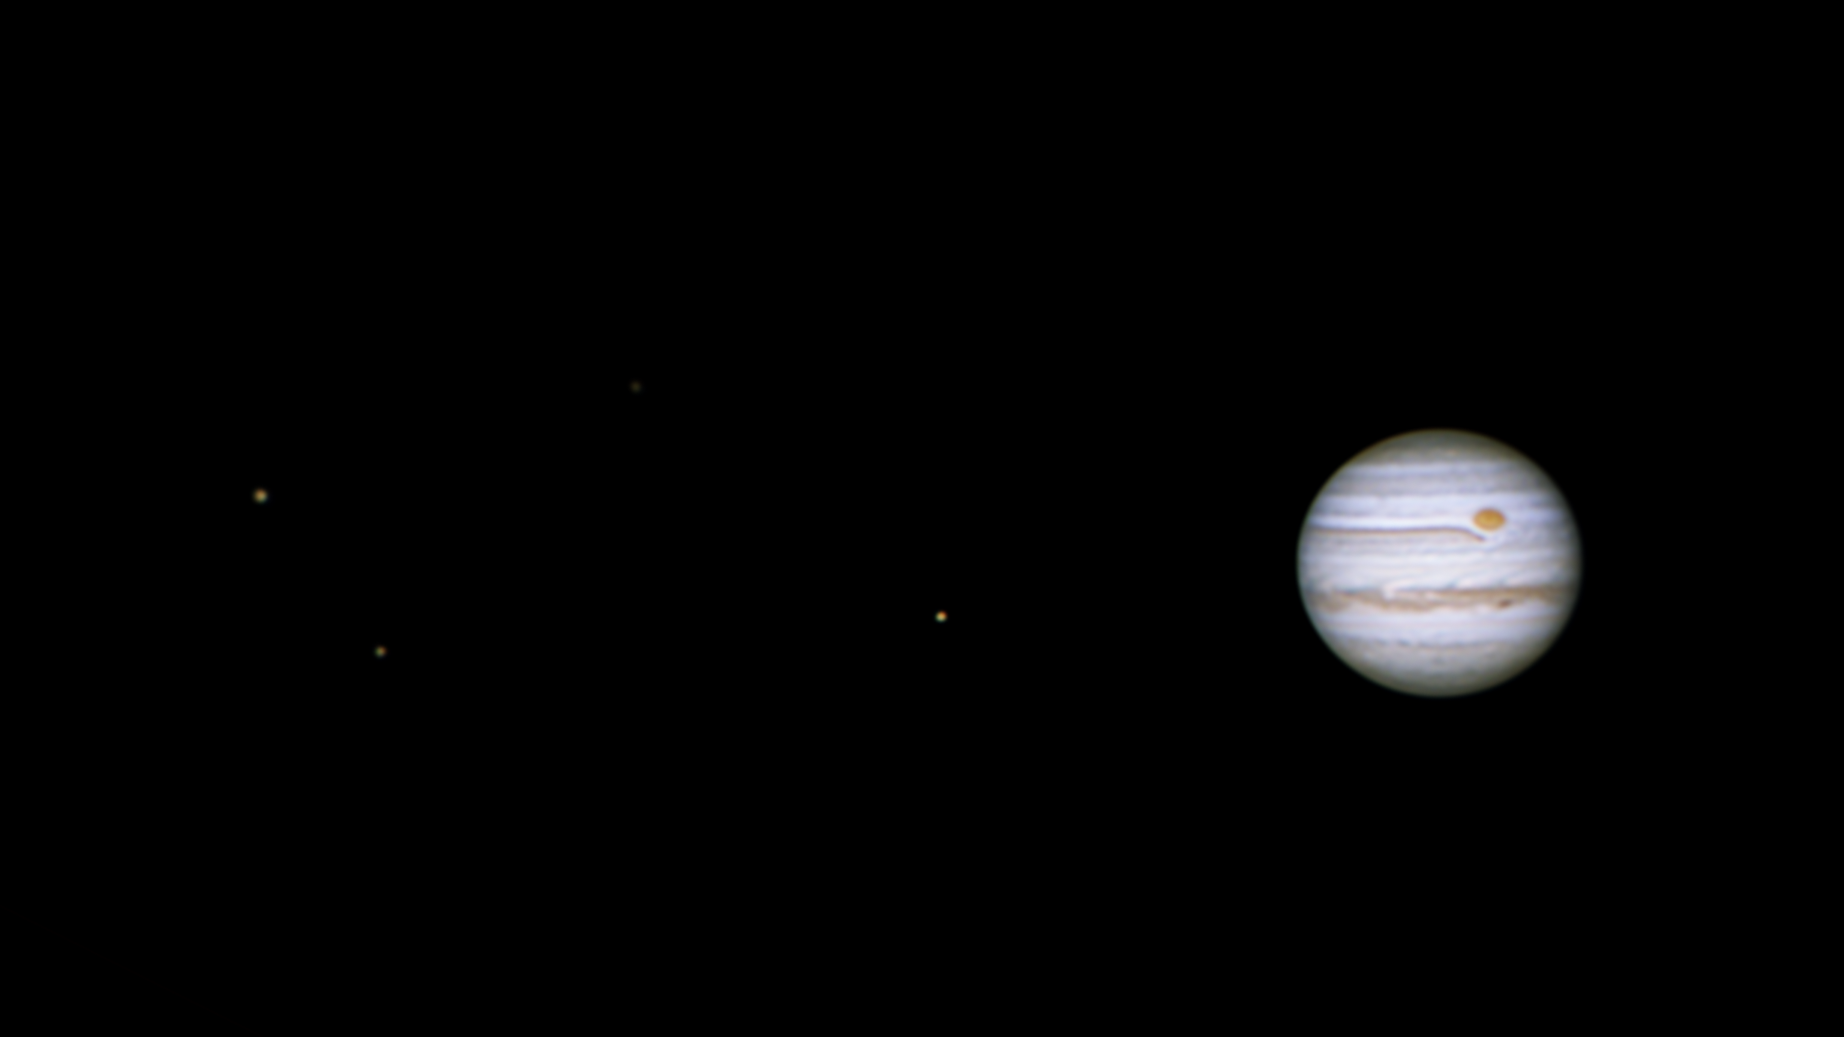 Source: Stewart, P. (2018, June 8). Jupiter. flickr. https://www.flickr.com/photos/106648653@N05/42658035711